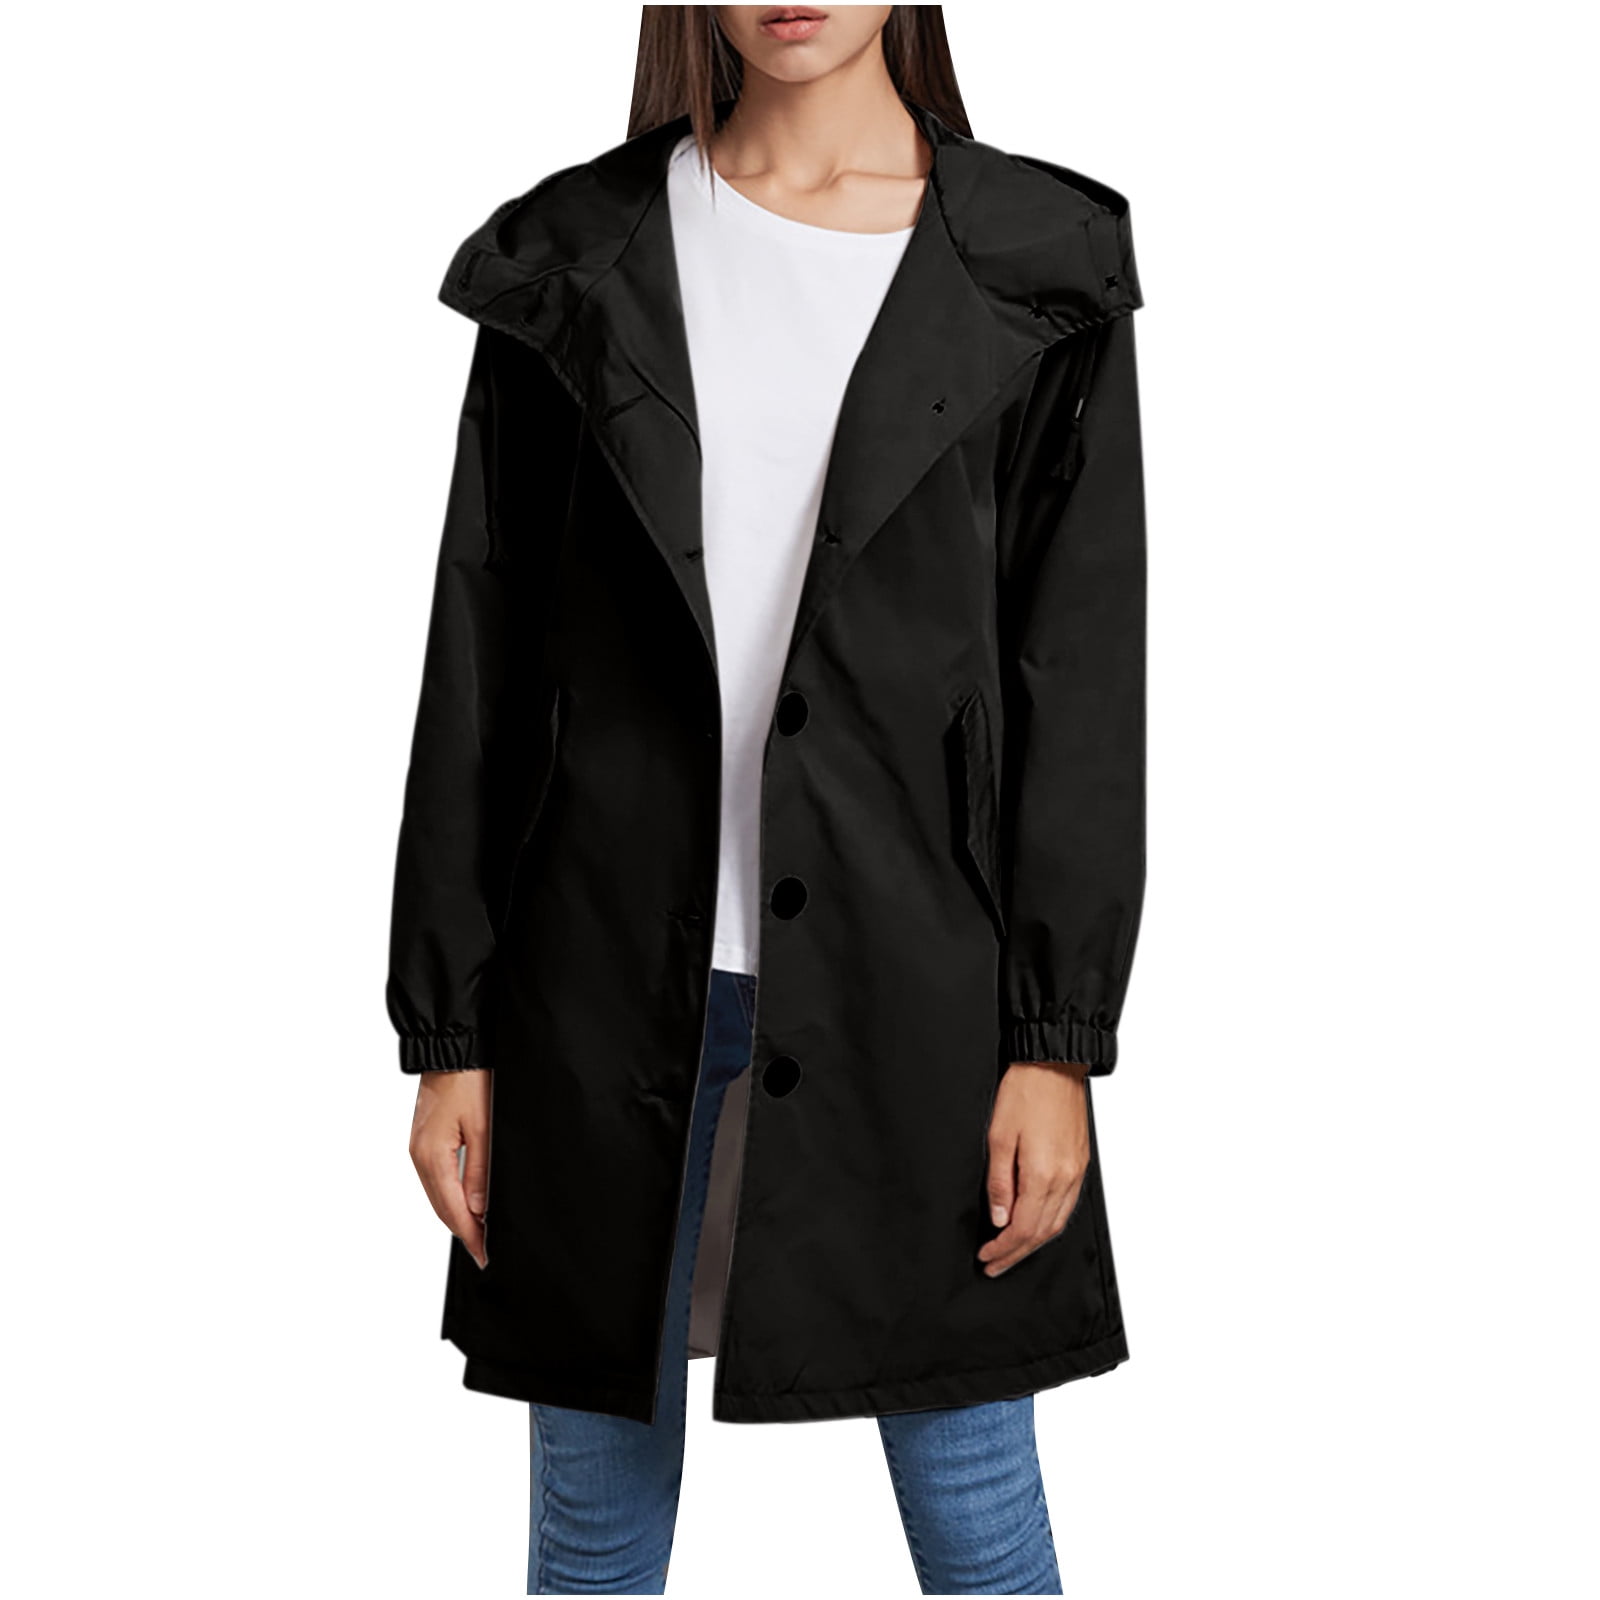 qucoqpe Women's Long Hooded Rain Jacket Outdoor Raincoat Windbreaker on ...